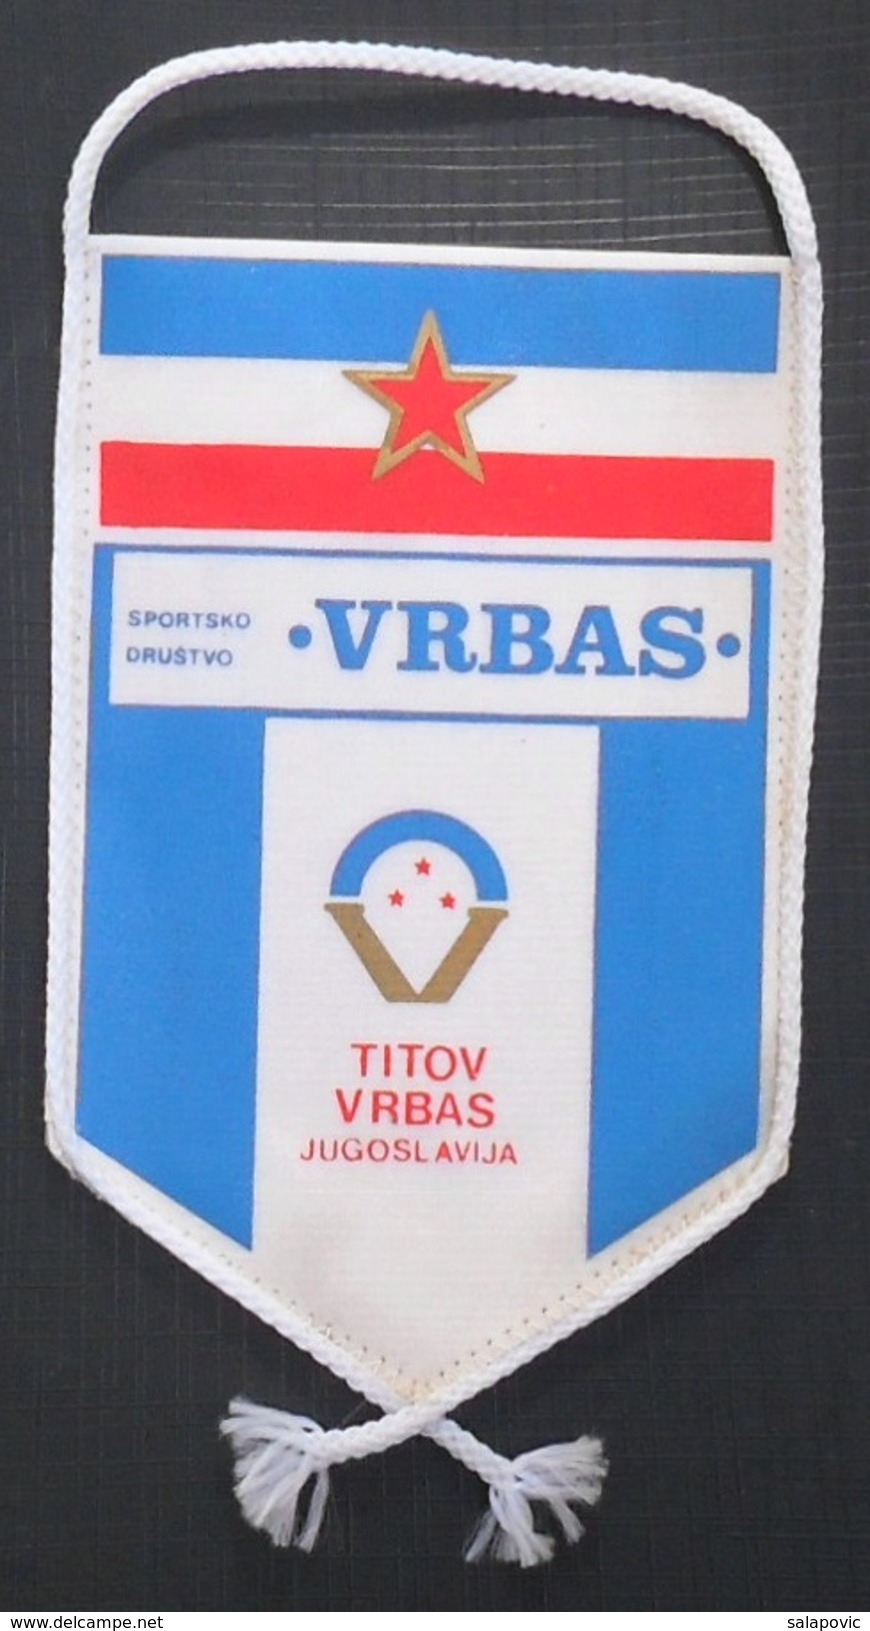 SD VRBAS, TITOV VRBAS, SERBIA FOOTBALL CLUB, CALCIO OLD PENNANT, SPORTS FLAG - Uniformes Recordatorios & Misc